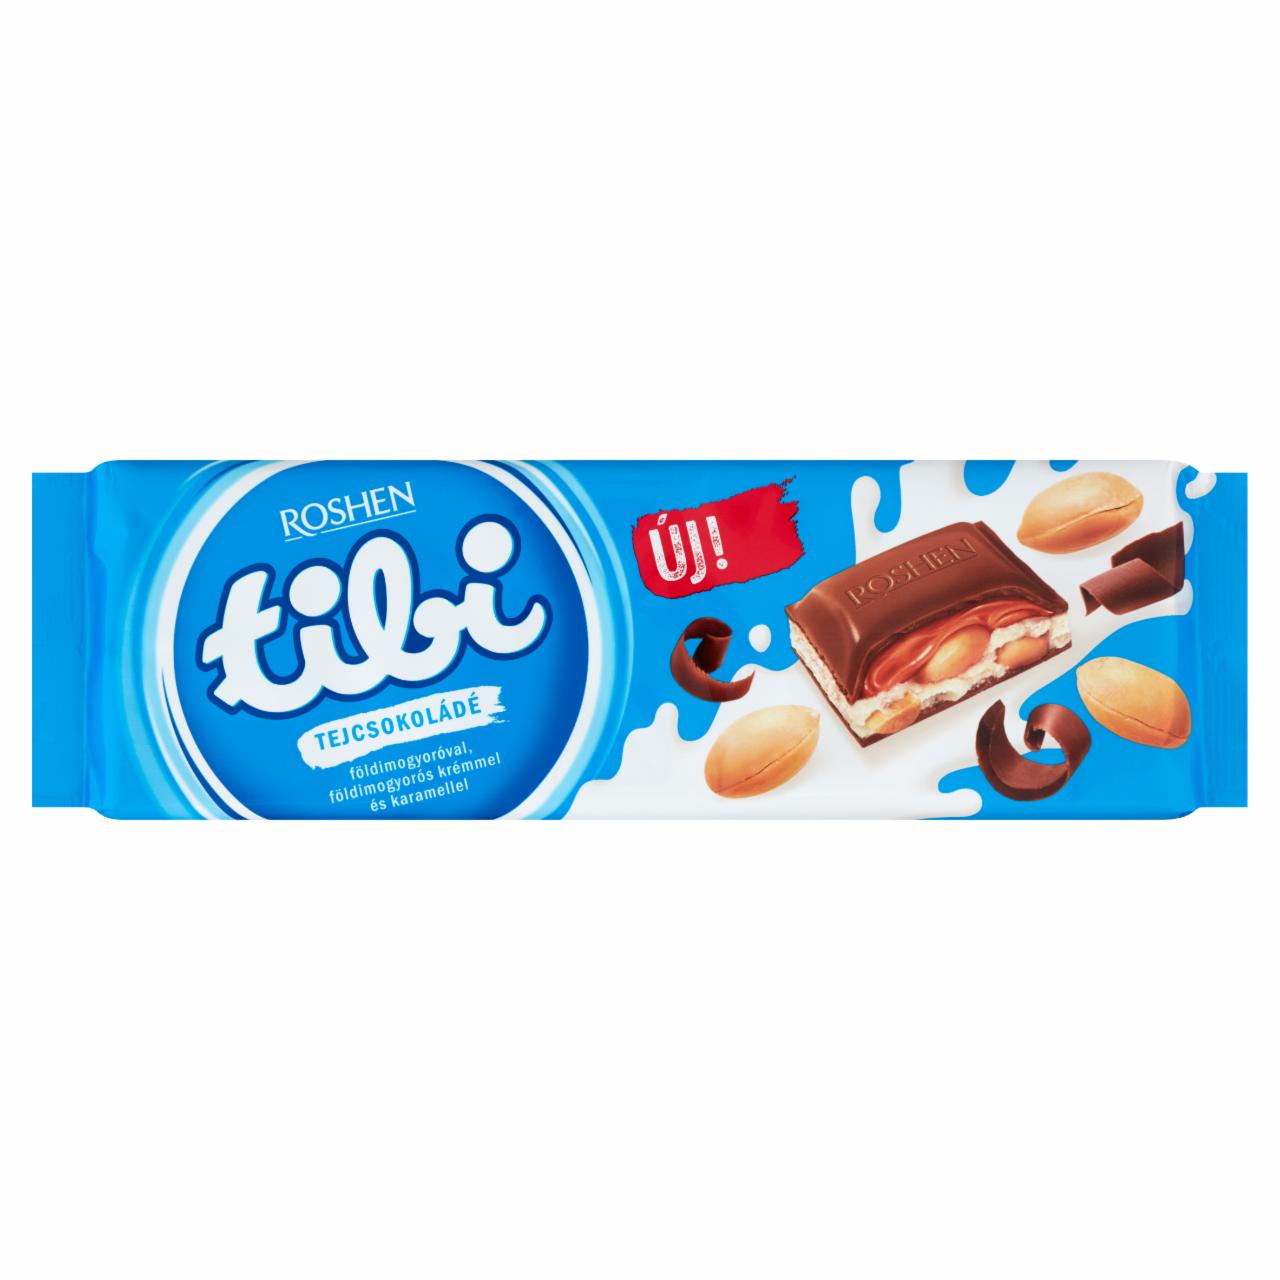 Photo - Tibi Milk Chocolate with Peanuts, Peanut Cream and Caramel 295 g